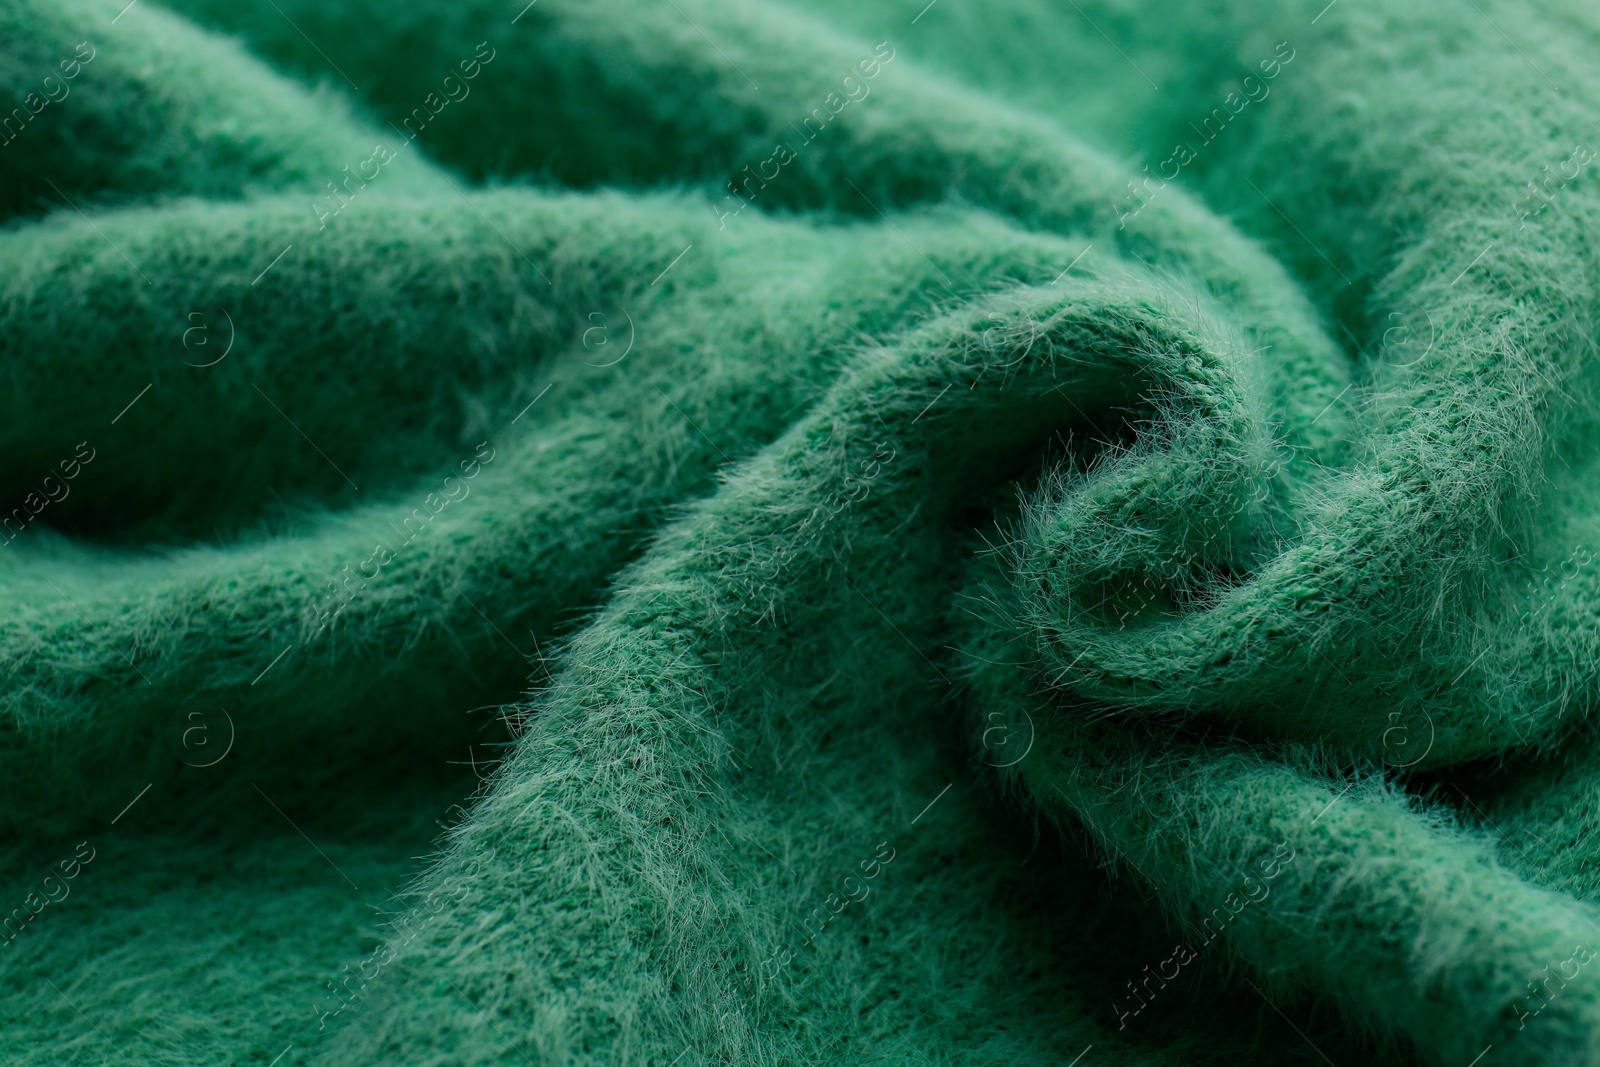 Photo of Beautiful green fabric as background, closeup view